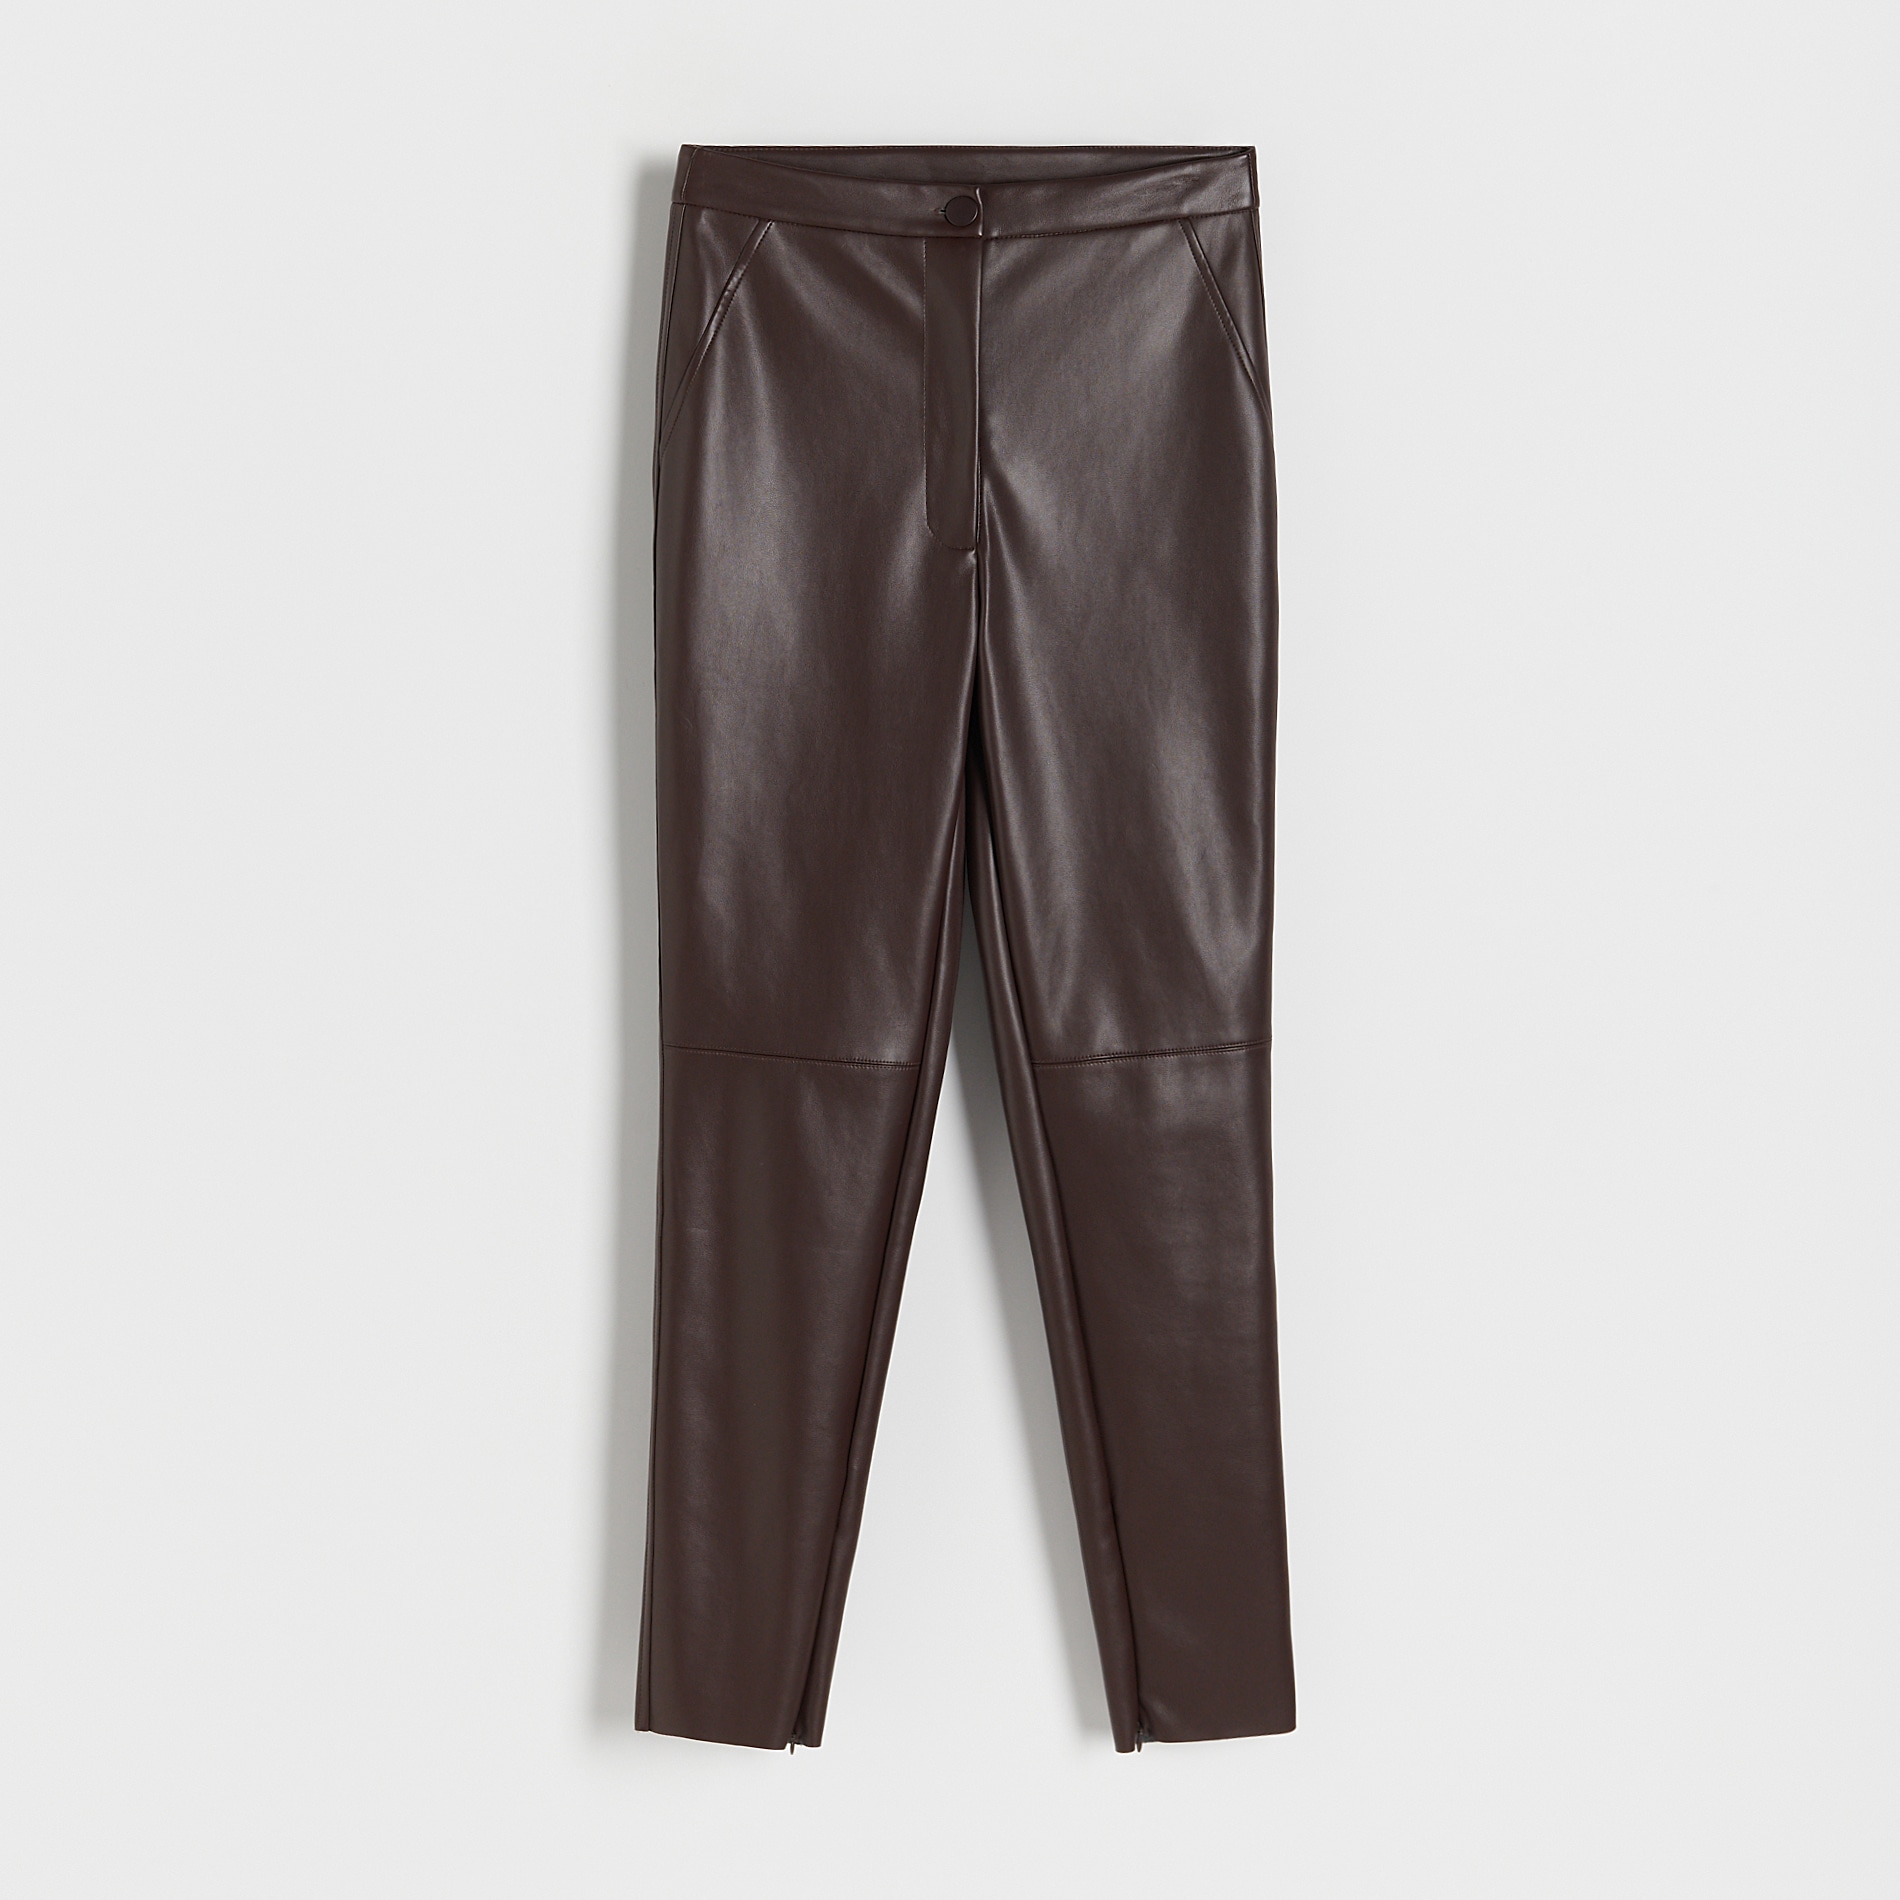 Reserved - Pantaloni din piele ecologică - Maro